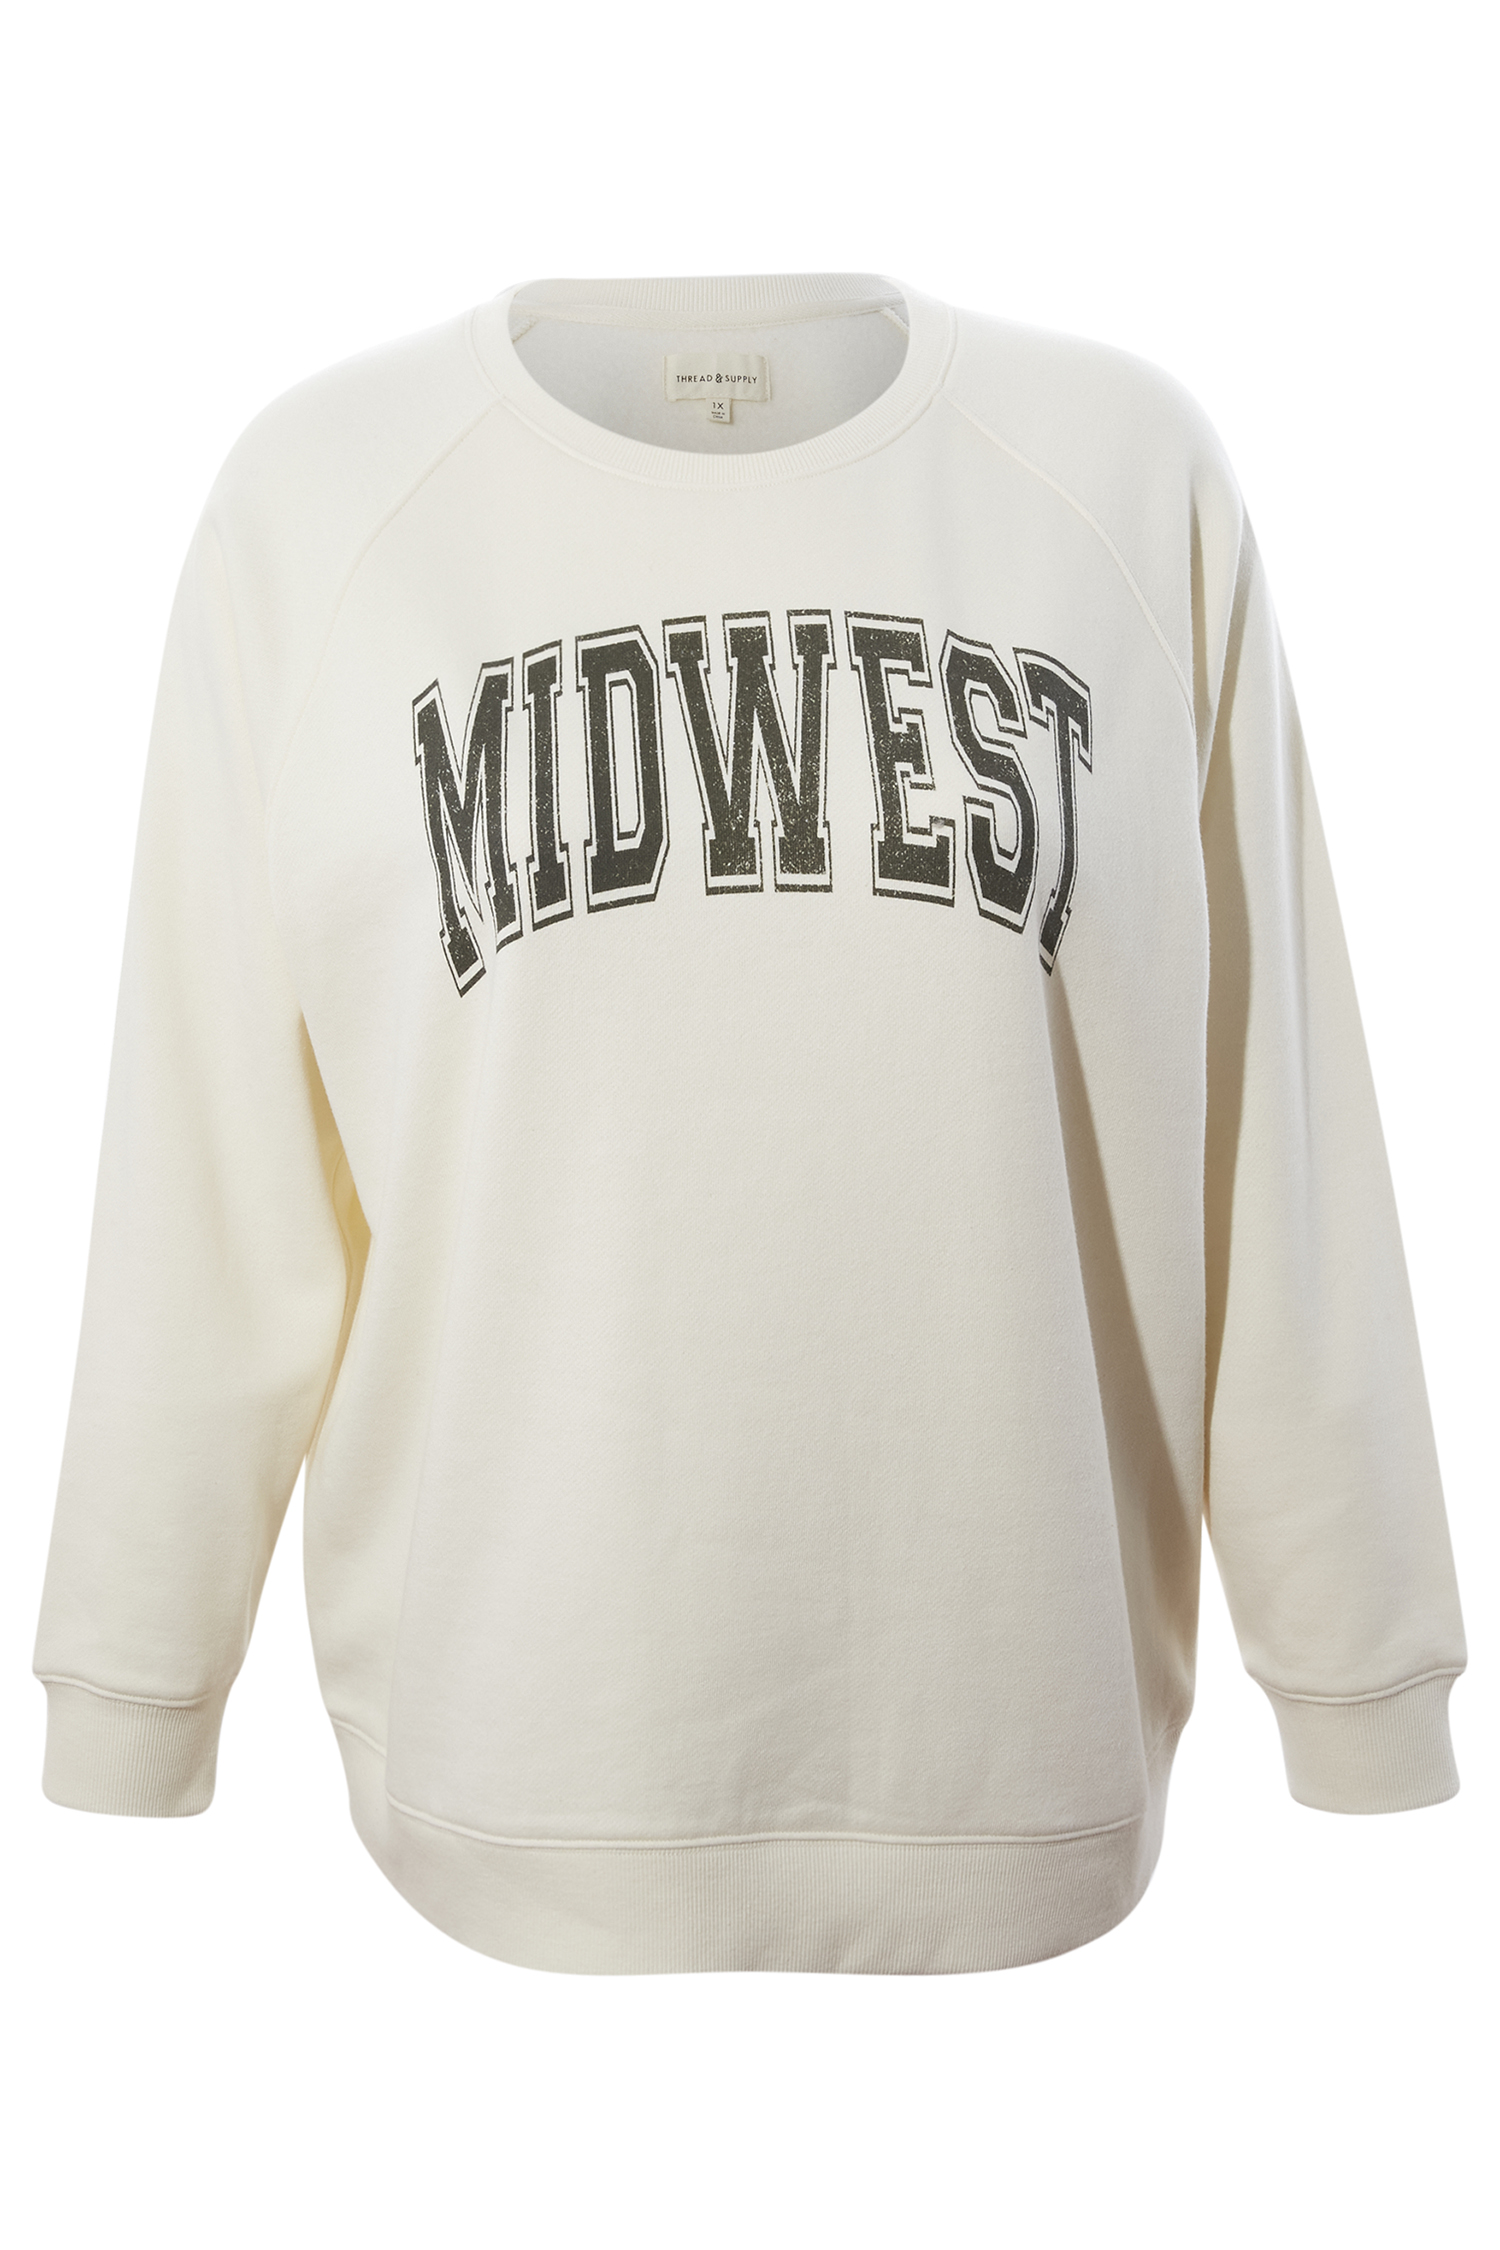 Thread & Supply Midwest Sweatshirt in Cream Multi 1X - 3X | DAILYLOOK